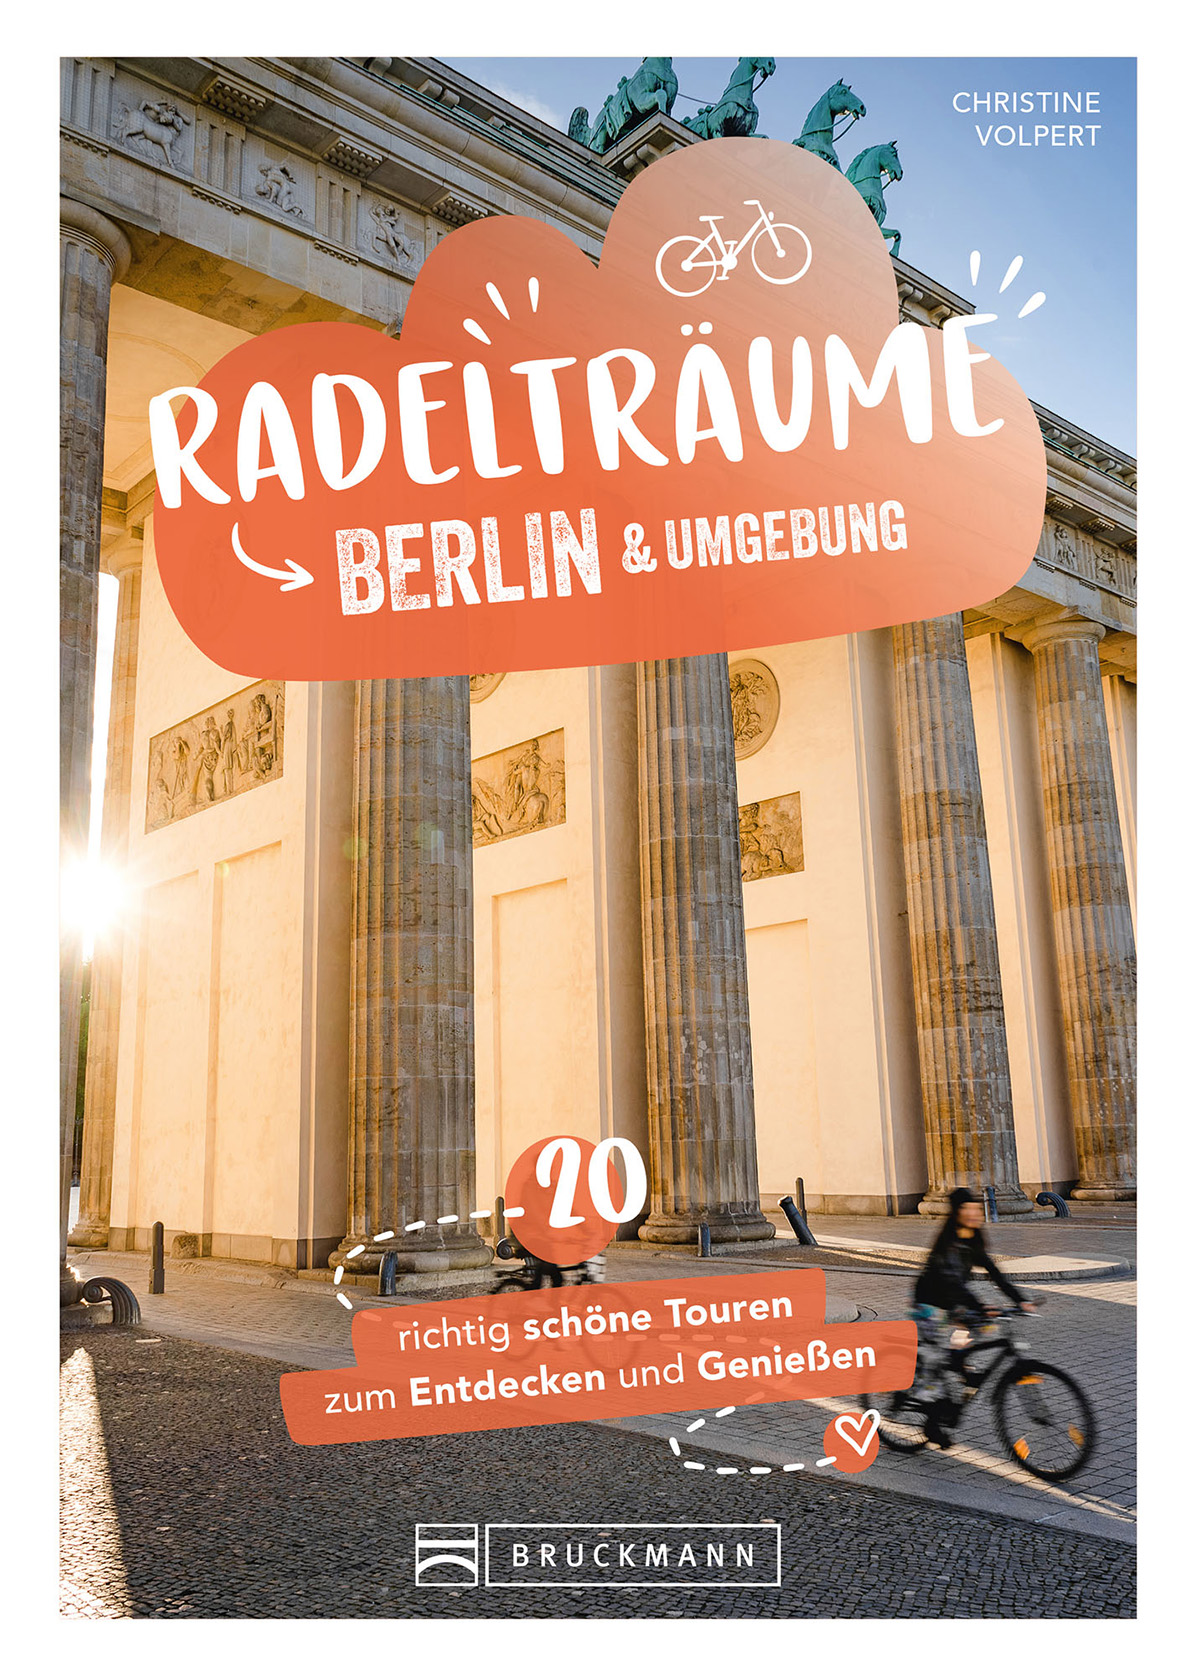 Radelträume Berlin & Umgebung (Bruckmann Verlag)